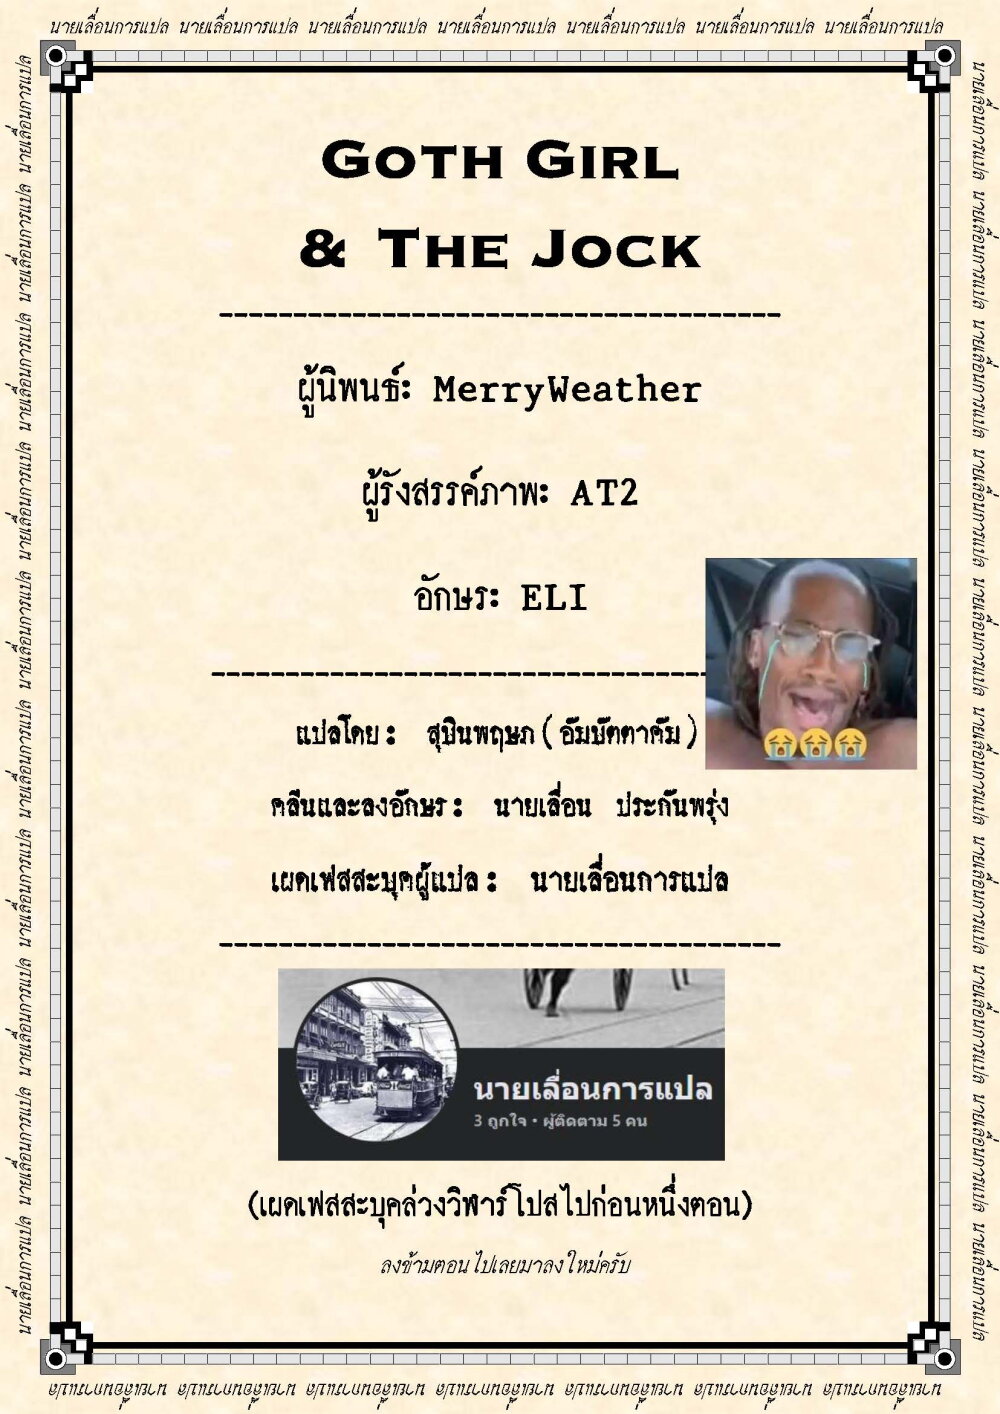 Goth Girl & The Jock 17 10